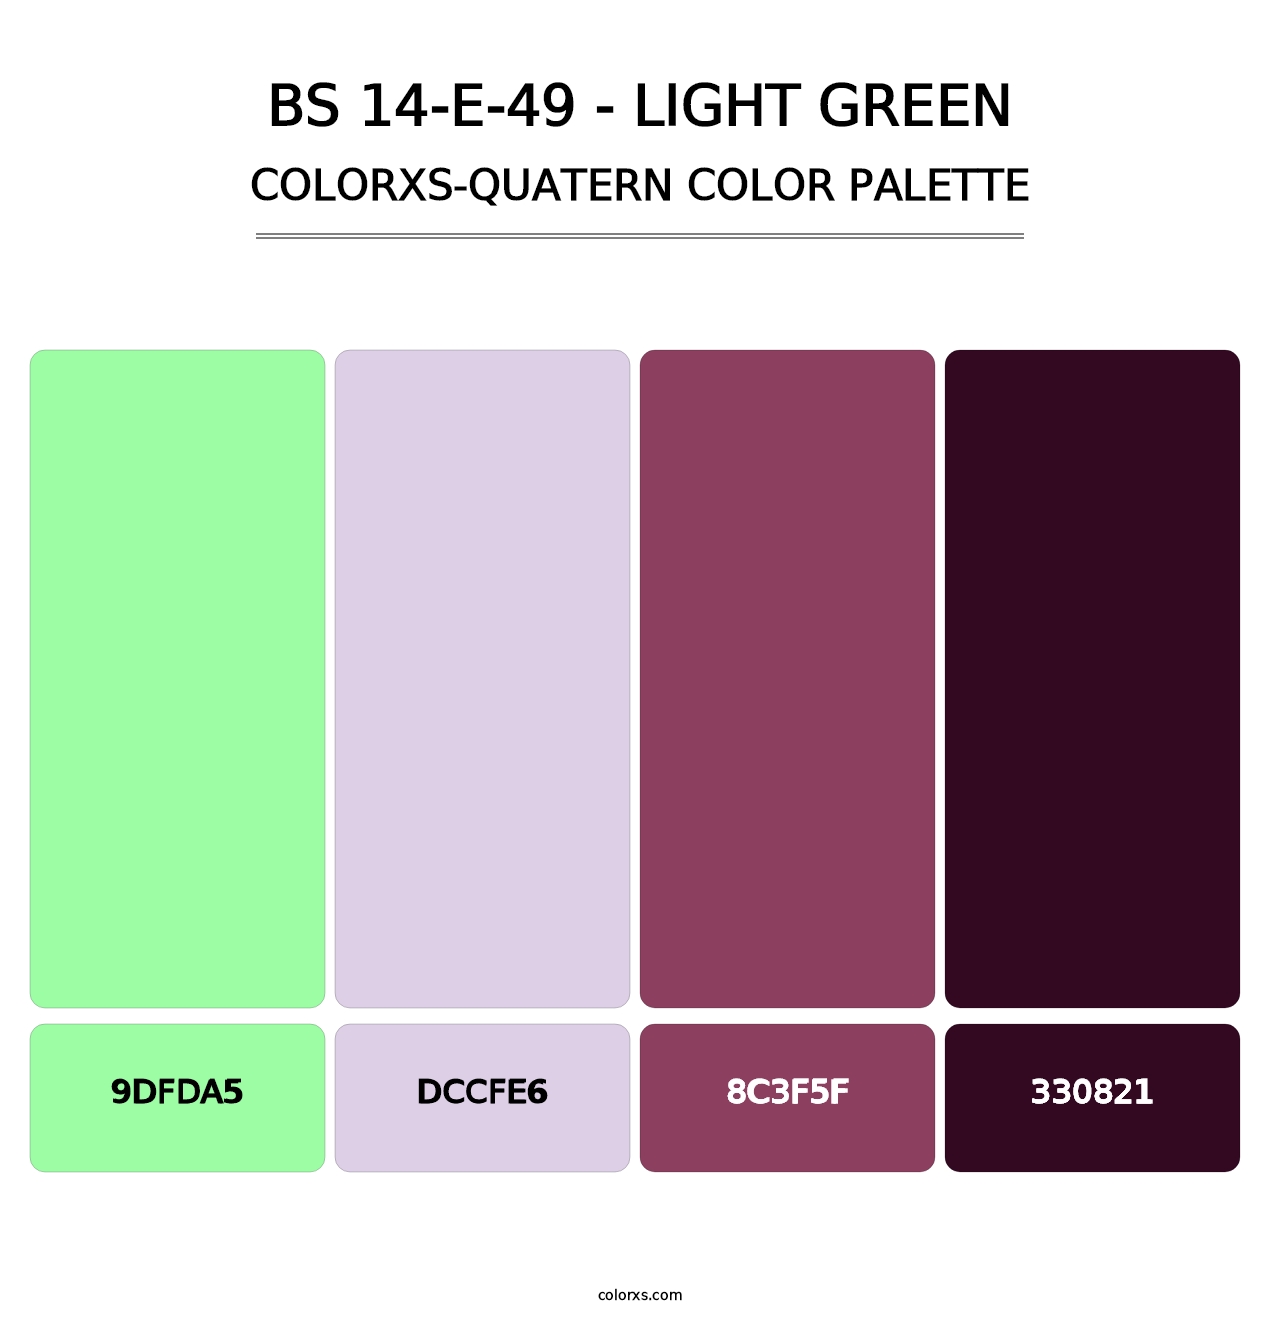 BS 14-E-49 - Light Green - Colorxs Quatern Palette